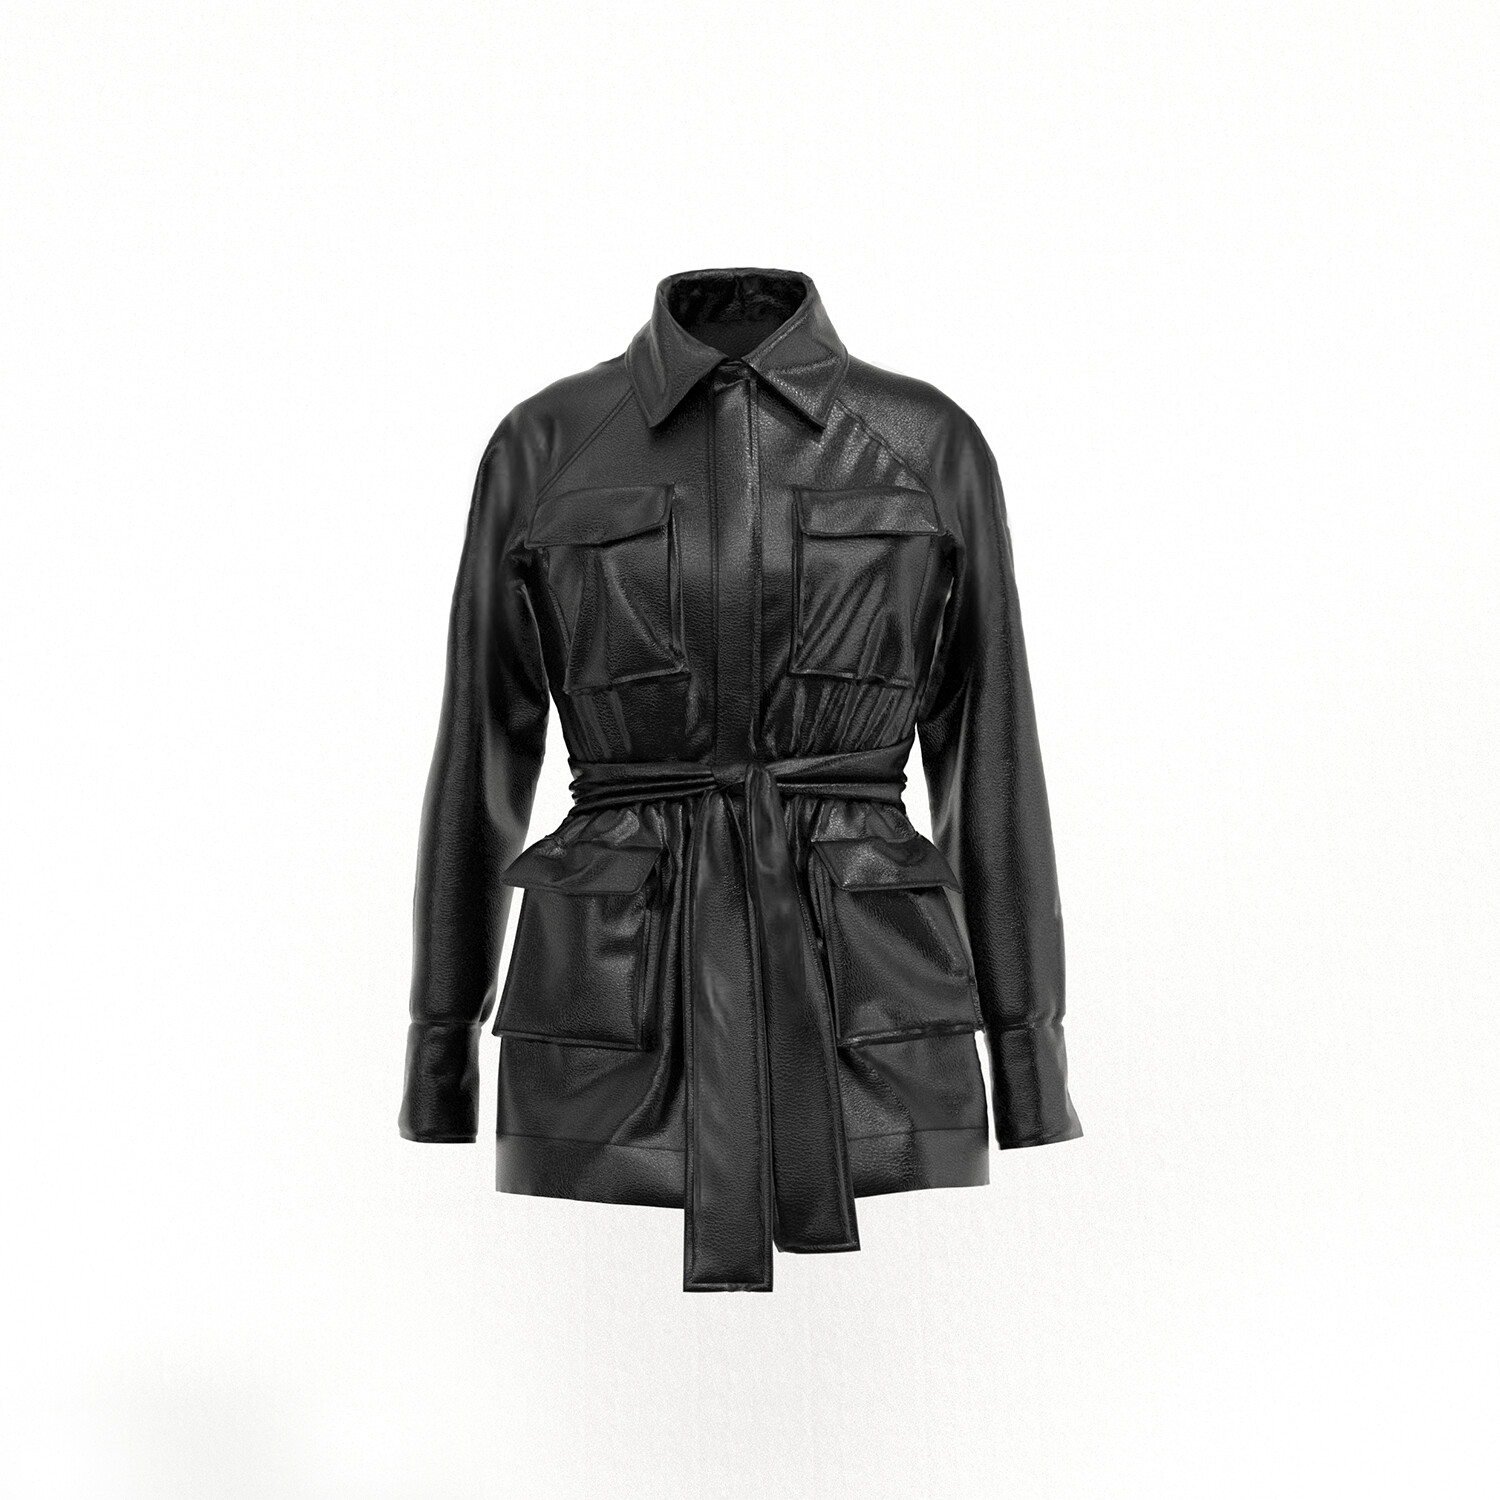 ArtStation - Leather Jacket